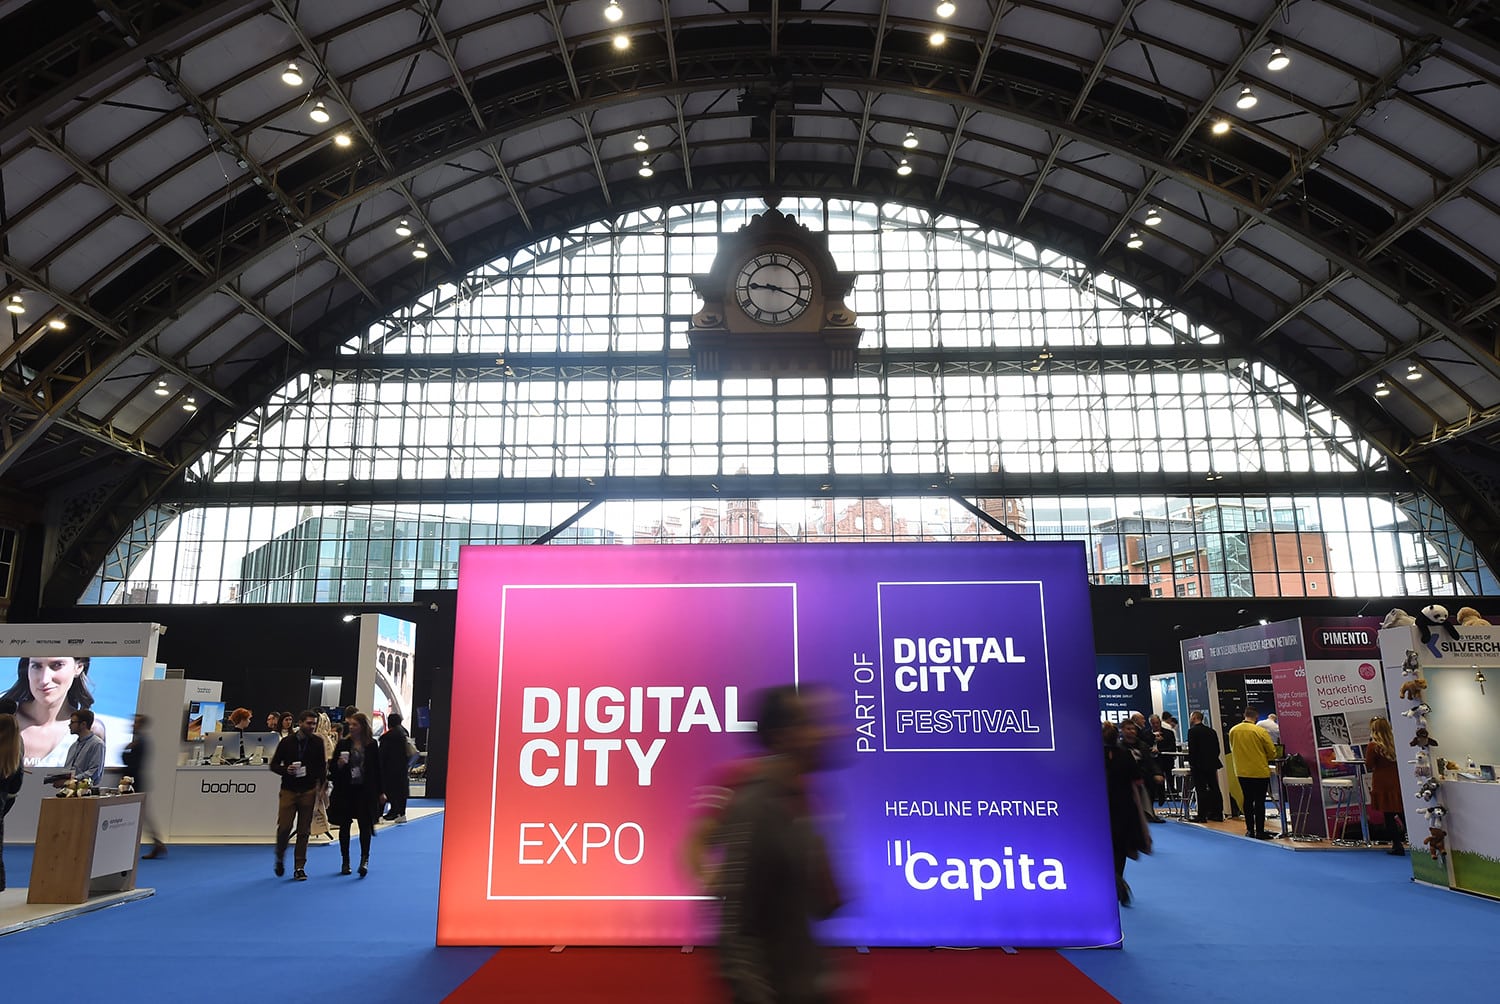 Digital City Expo, part of Digital City Festival